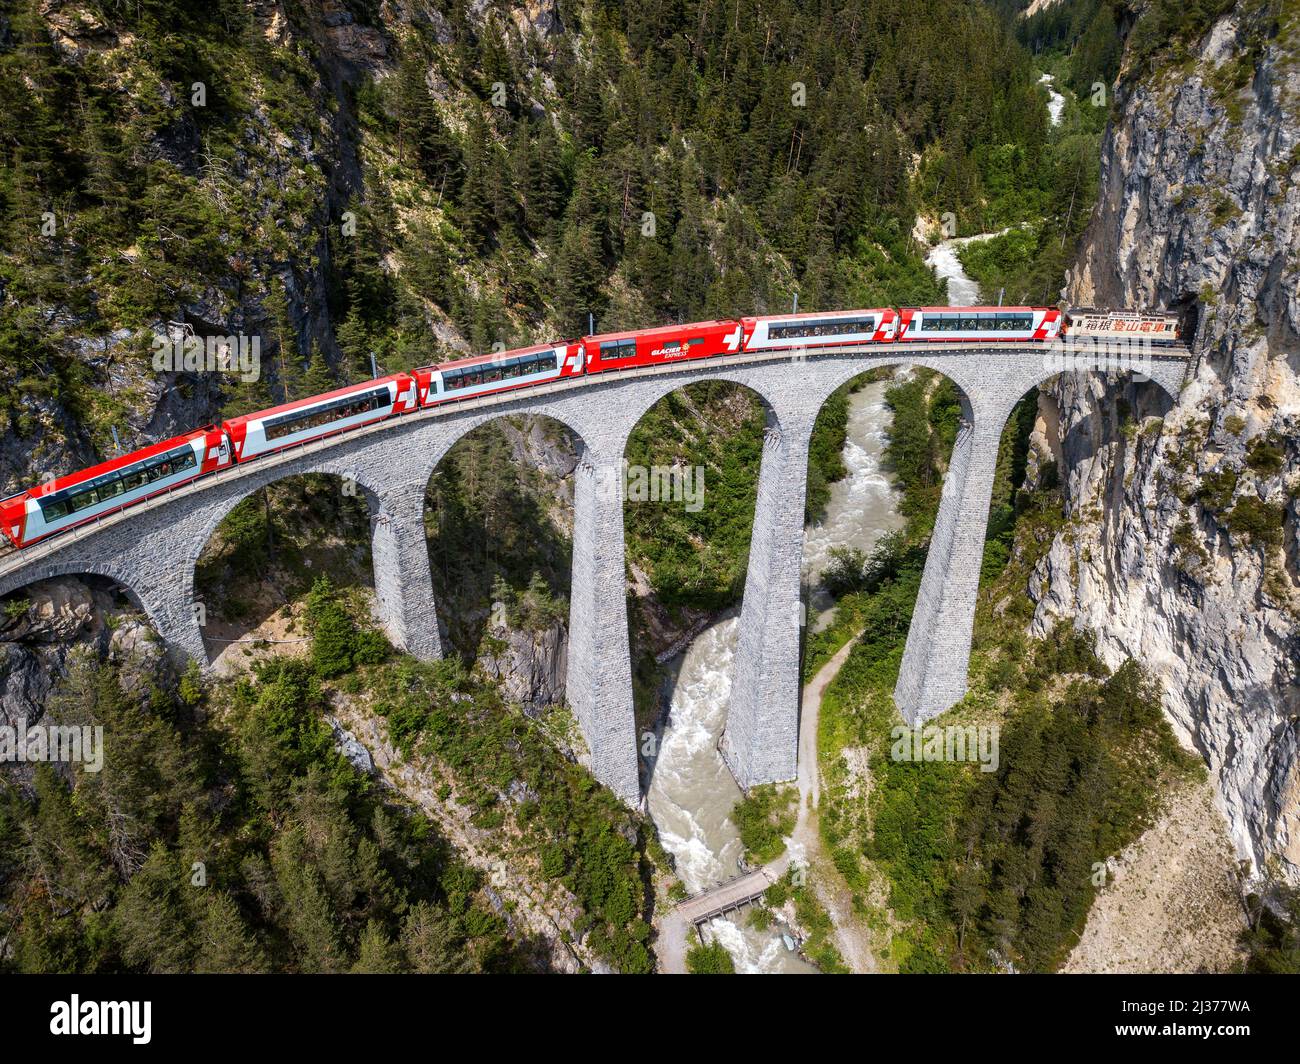 Glacier Express at the Landwasser Viaduct at Swiss Alps, Filisur, Graubunden Switzerland.  The Landwasser Viaduct is a single-track six-arched curved Stock Photo